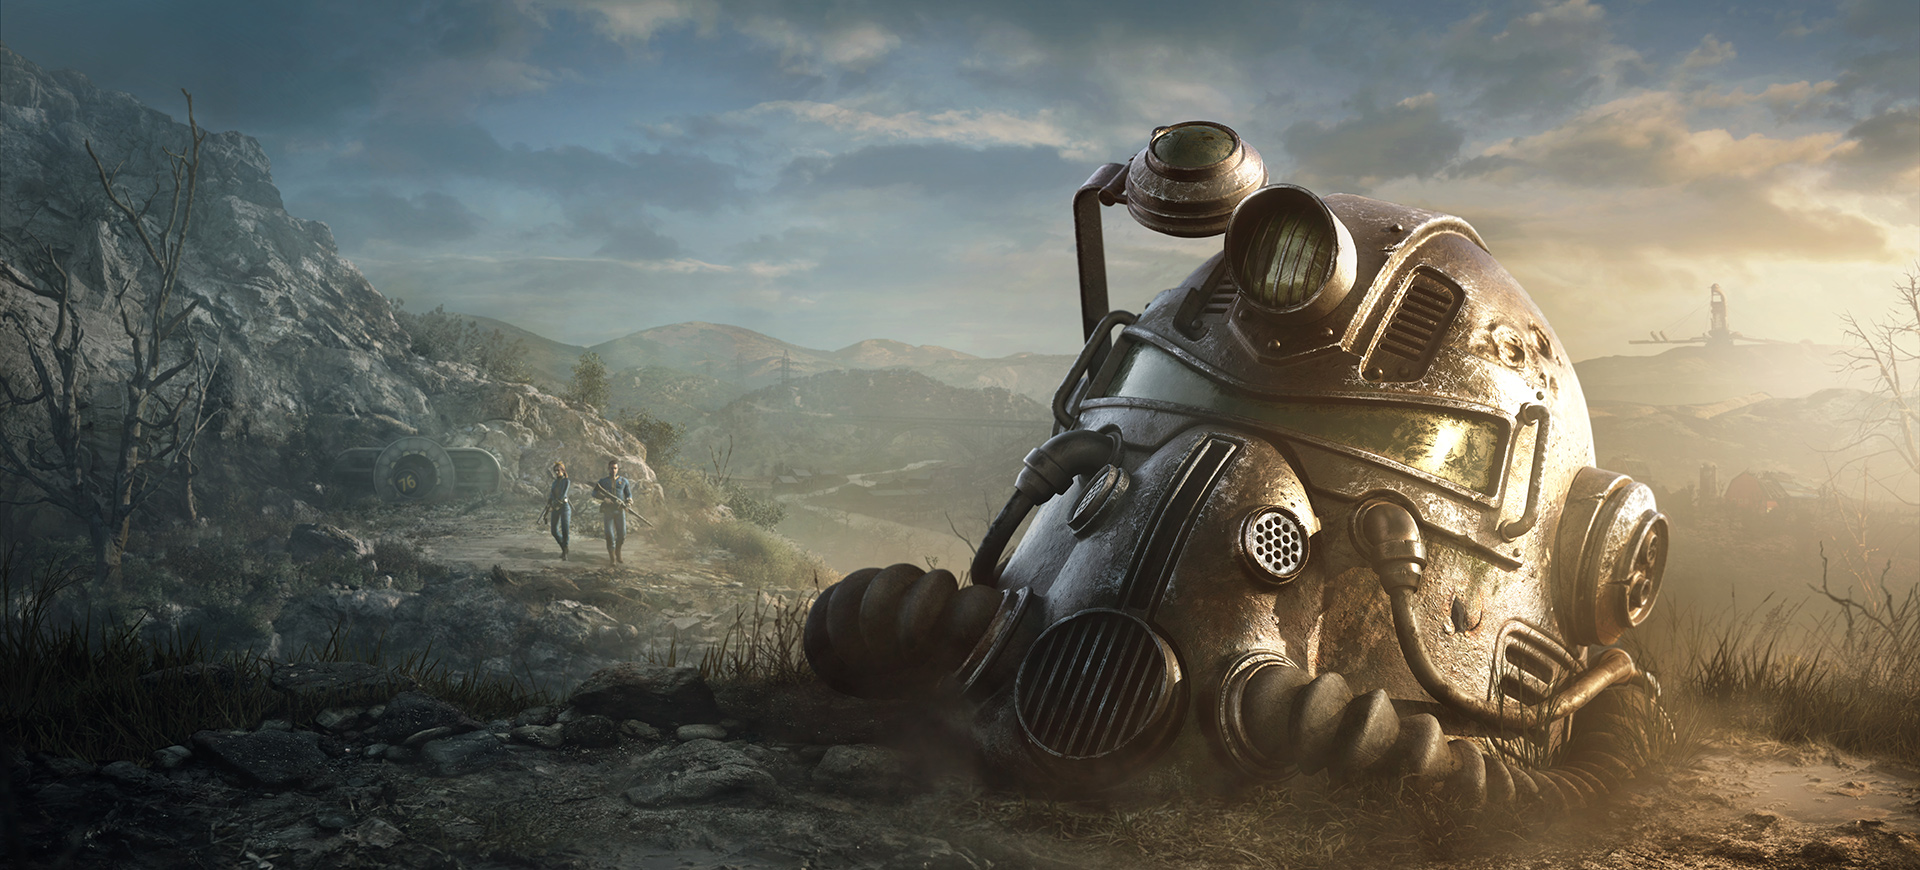 Fallout76_LargeHero_OfficialReveal1.jpg